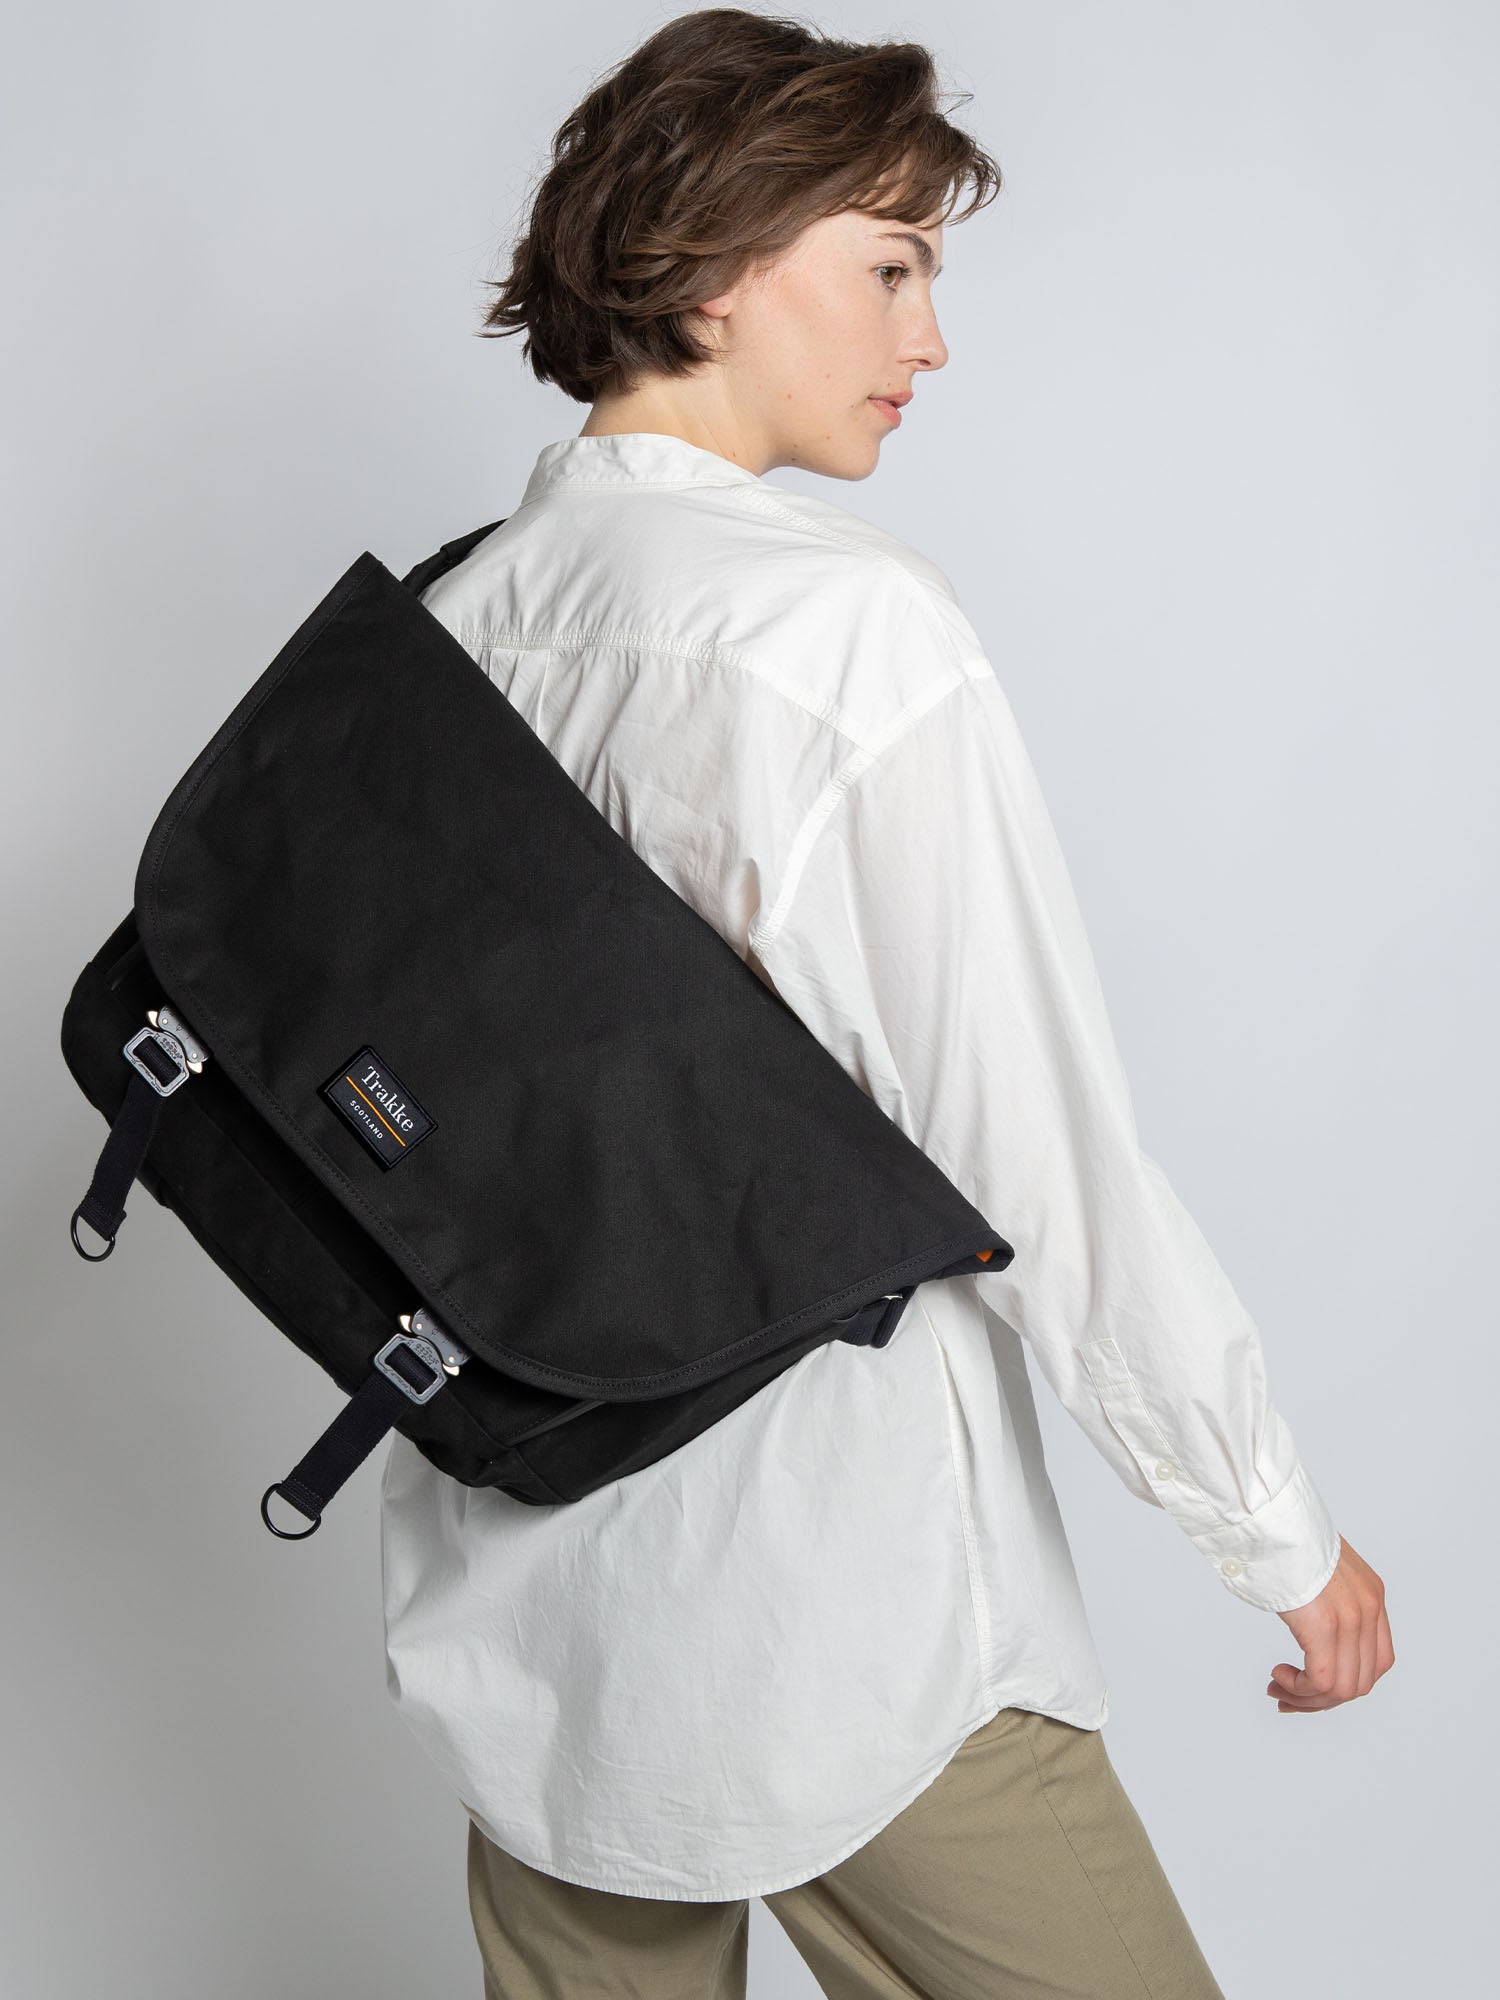 VICASKY Sling Bag Crossbody Tool Kit Tool Bag Tool Shoulder Bag Toolkit  Utility Bag Messenger